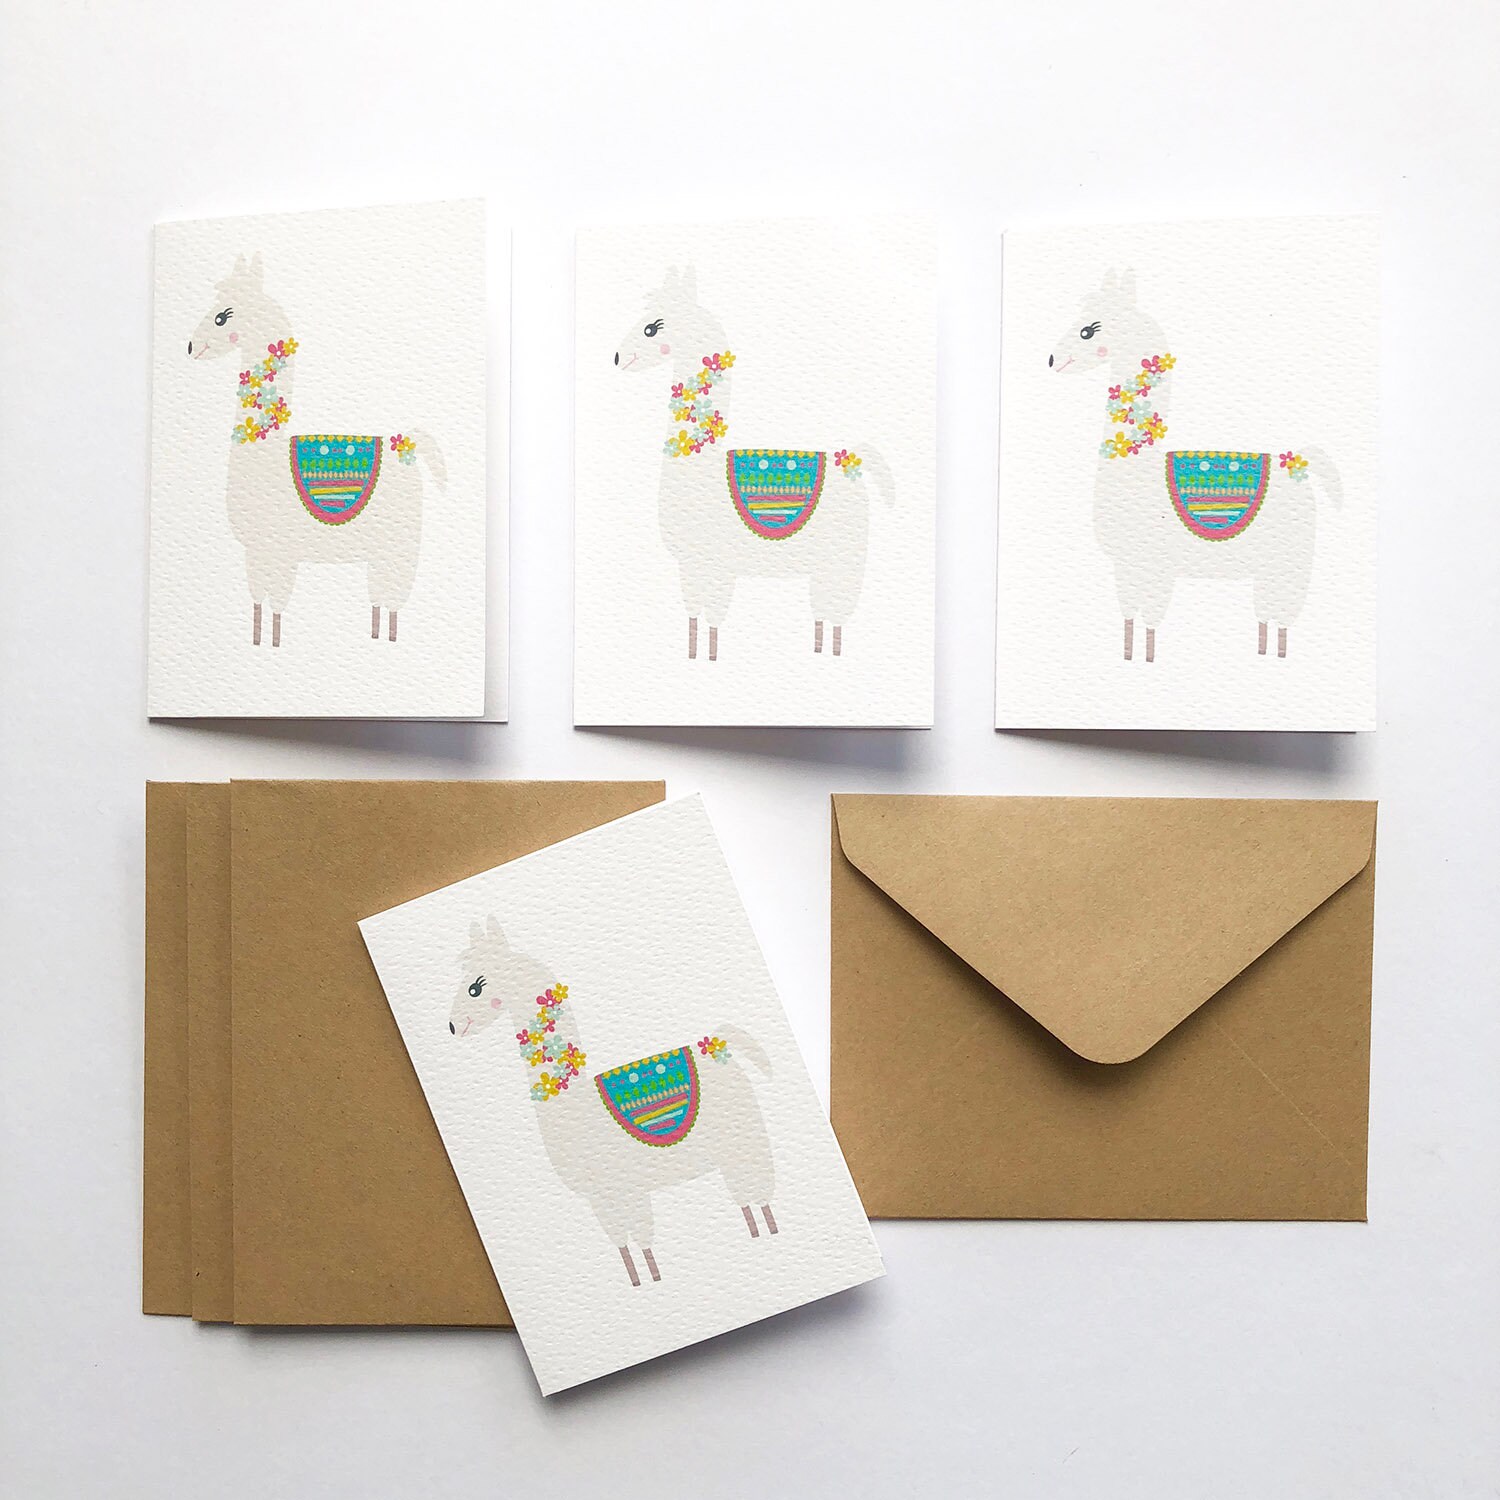 5 cartes d'invitation Lama + 5 enveloppes